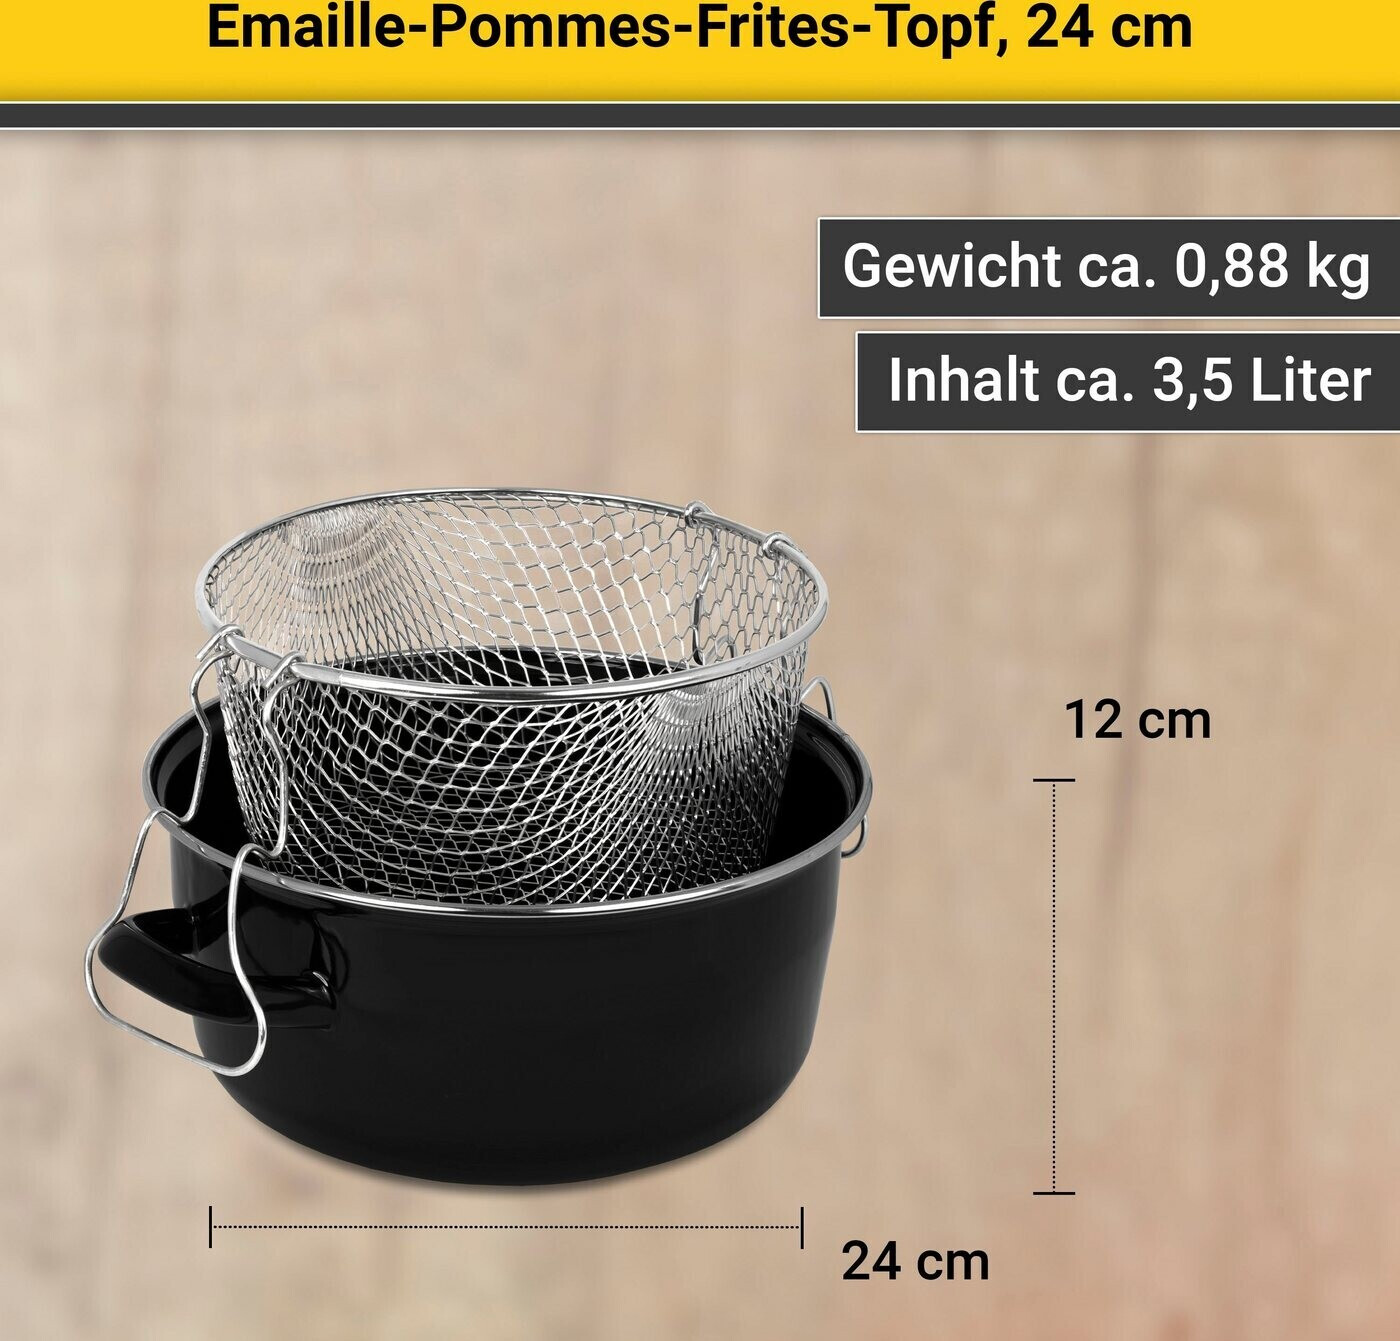 16,10 € Pommes-Frites-Topf ab cm bei Preisvergleich 24 Krüger |